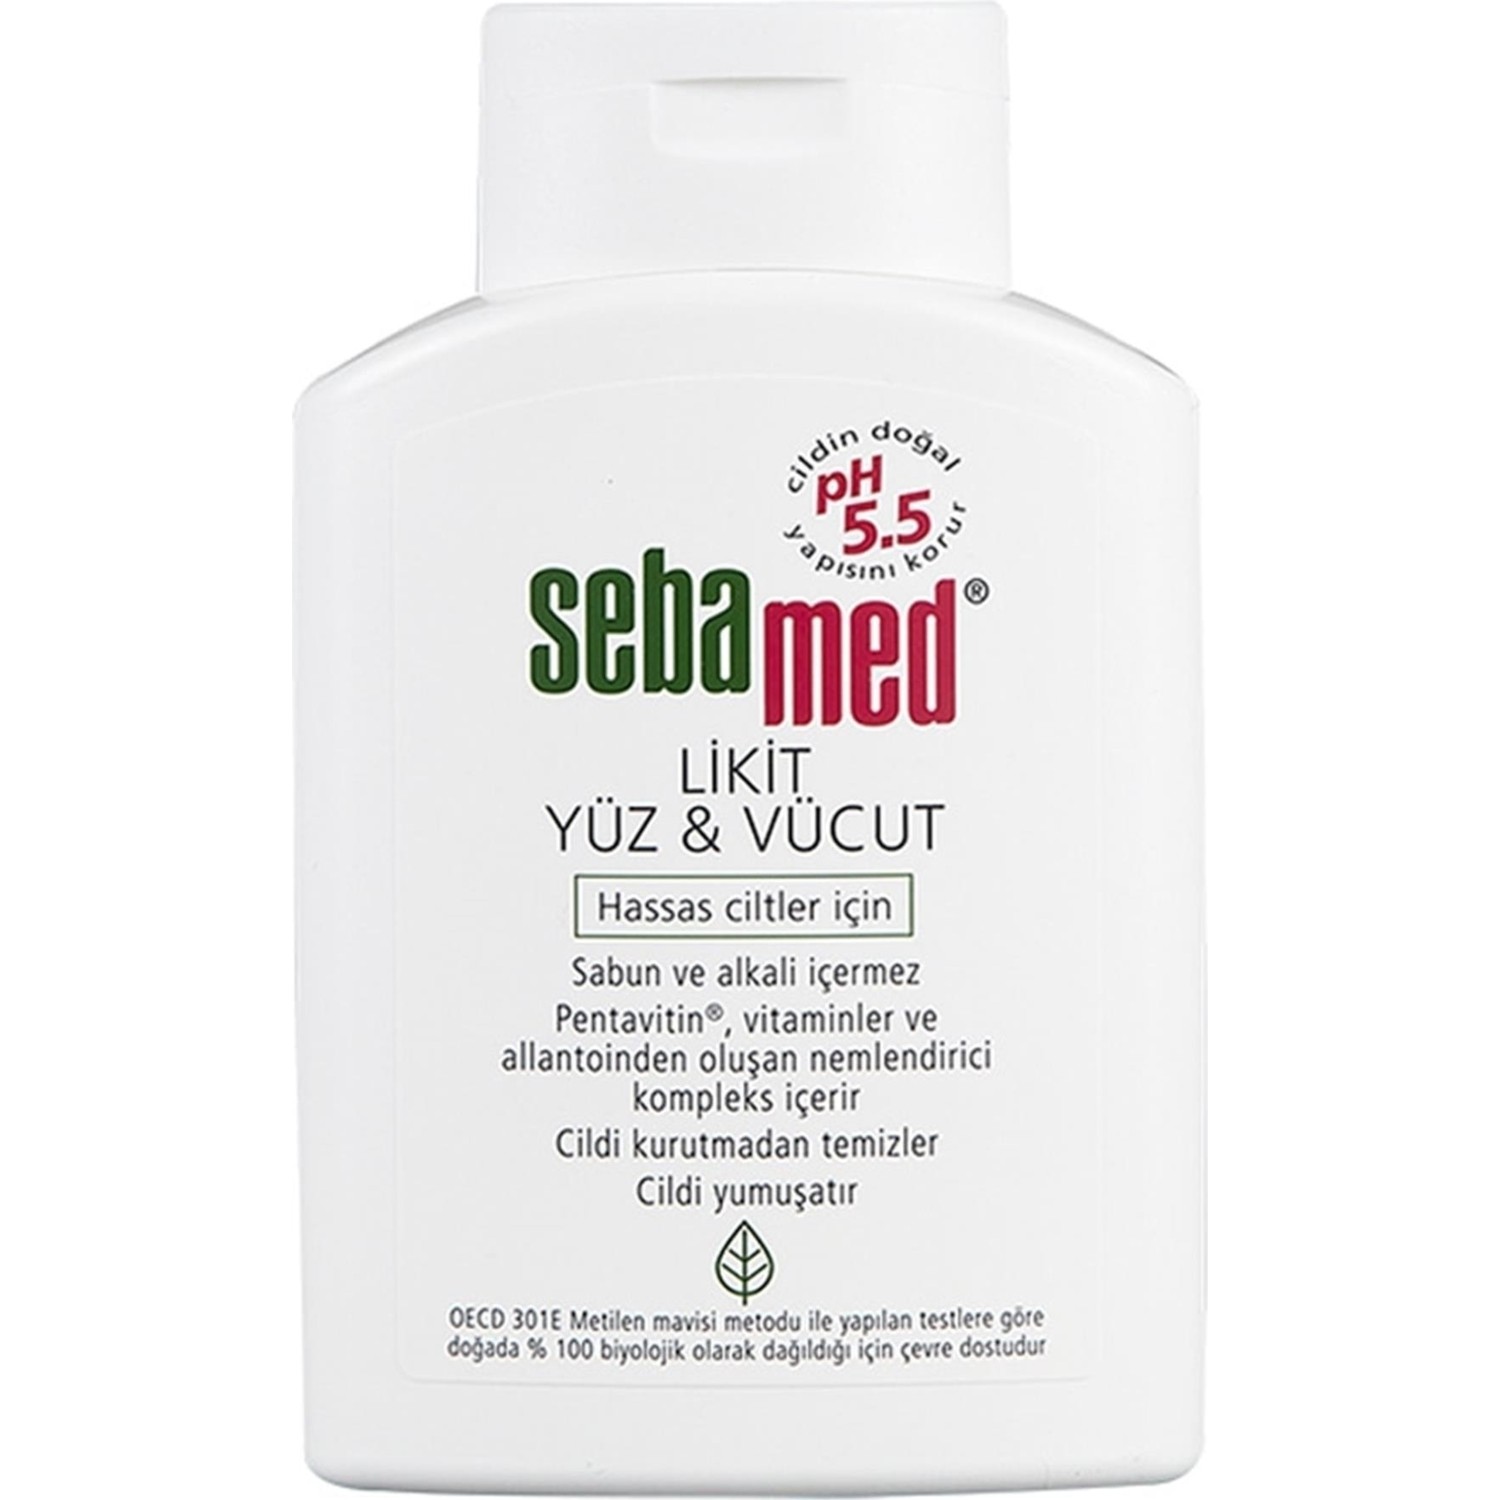 Очищающее средство Sebamed Liquid для лица и тела, 200 мл цена и фото